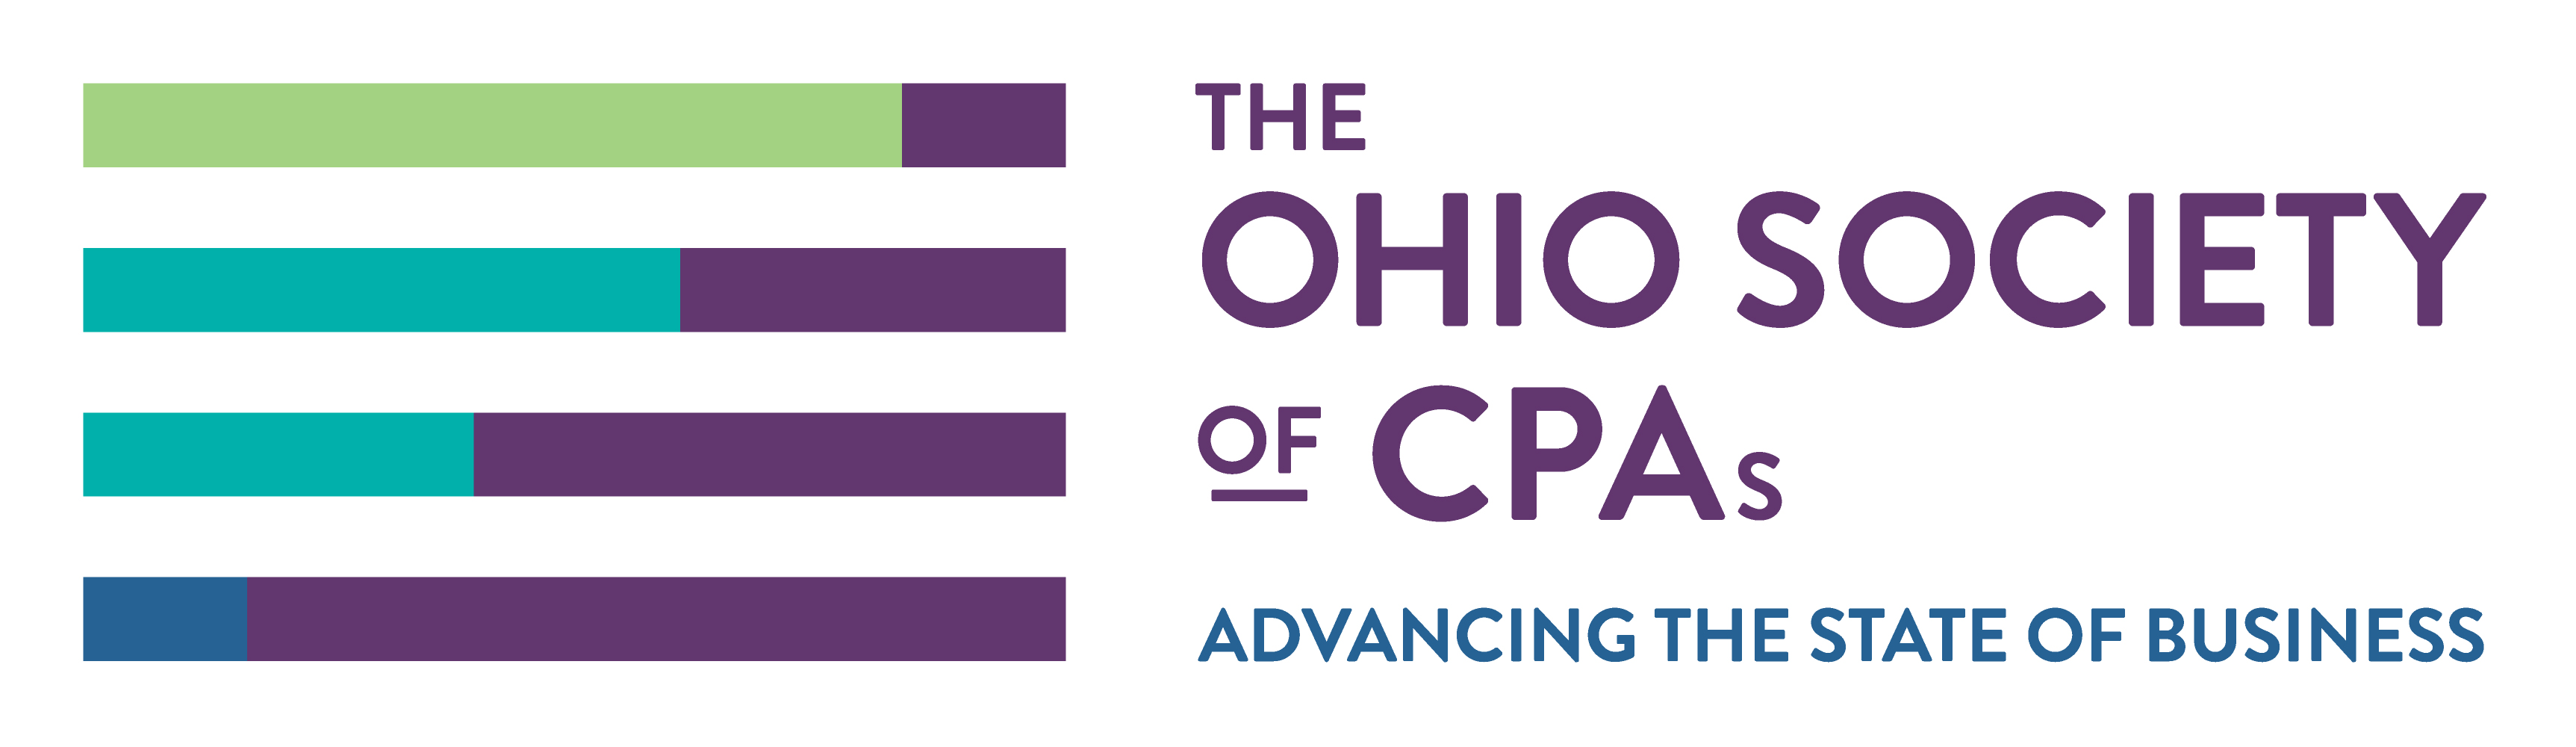 Ohio Society of CPAs